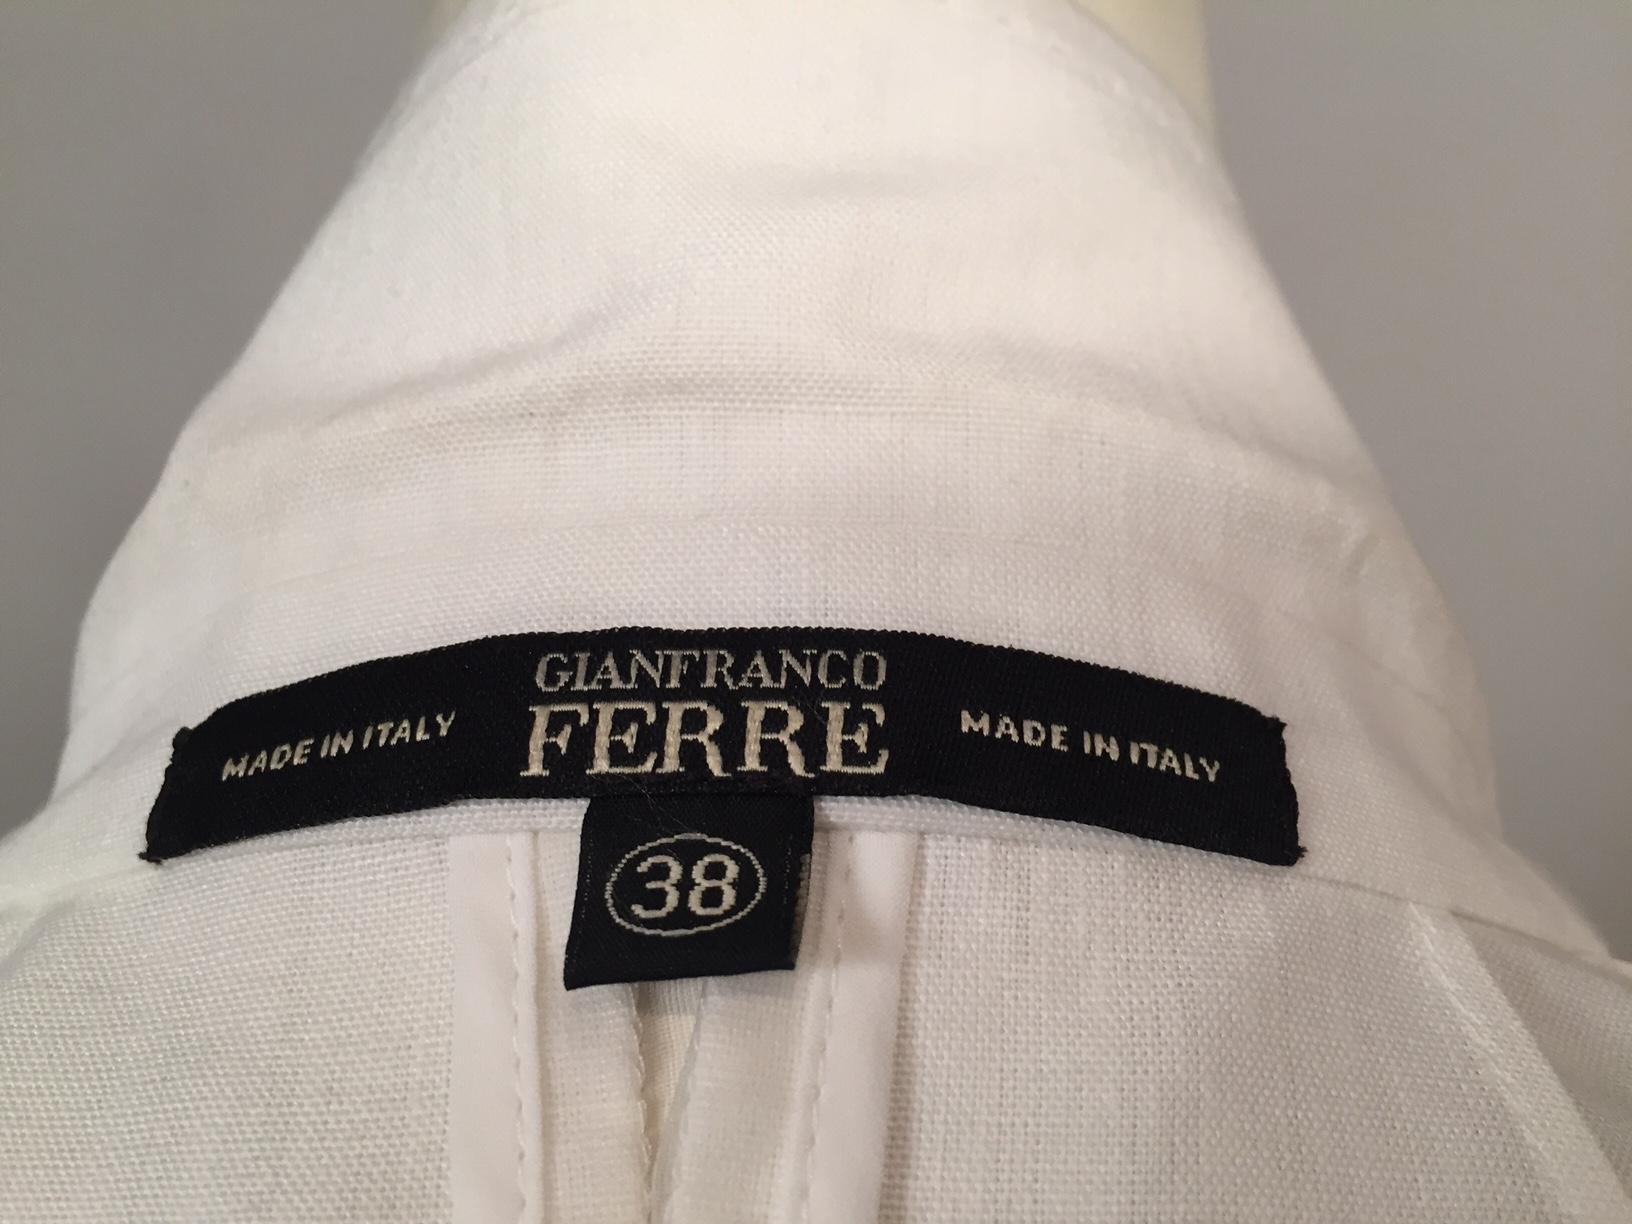 Gianfranco Ferre White Linen Jacket with Sheer Silk Organza Panels 6